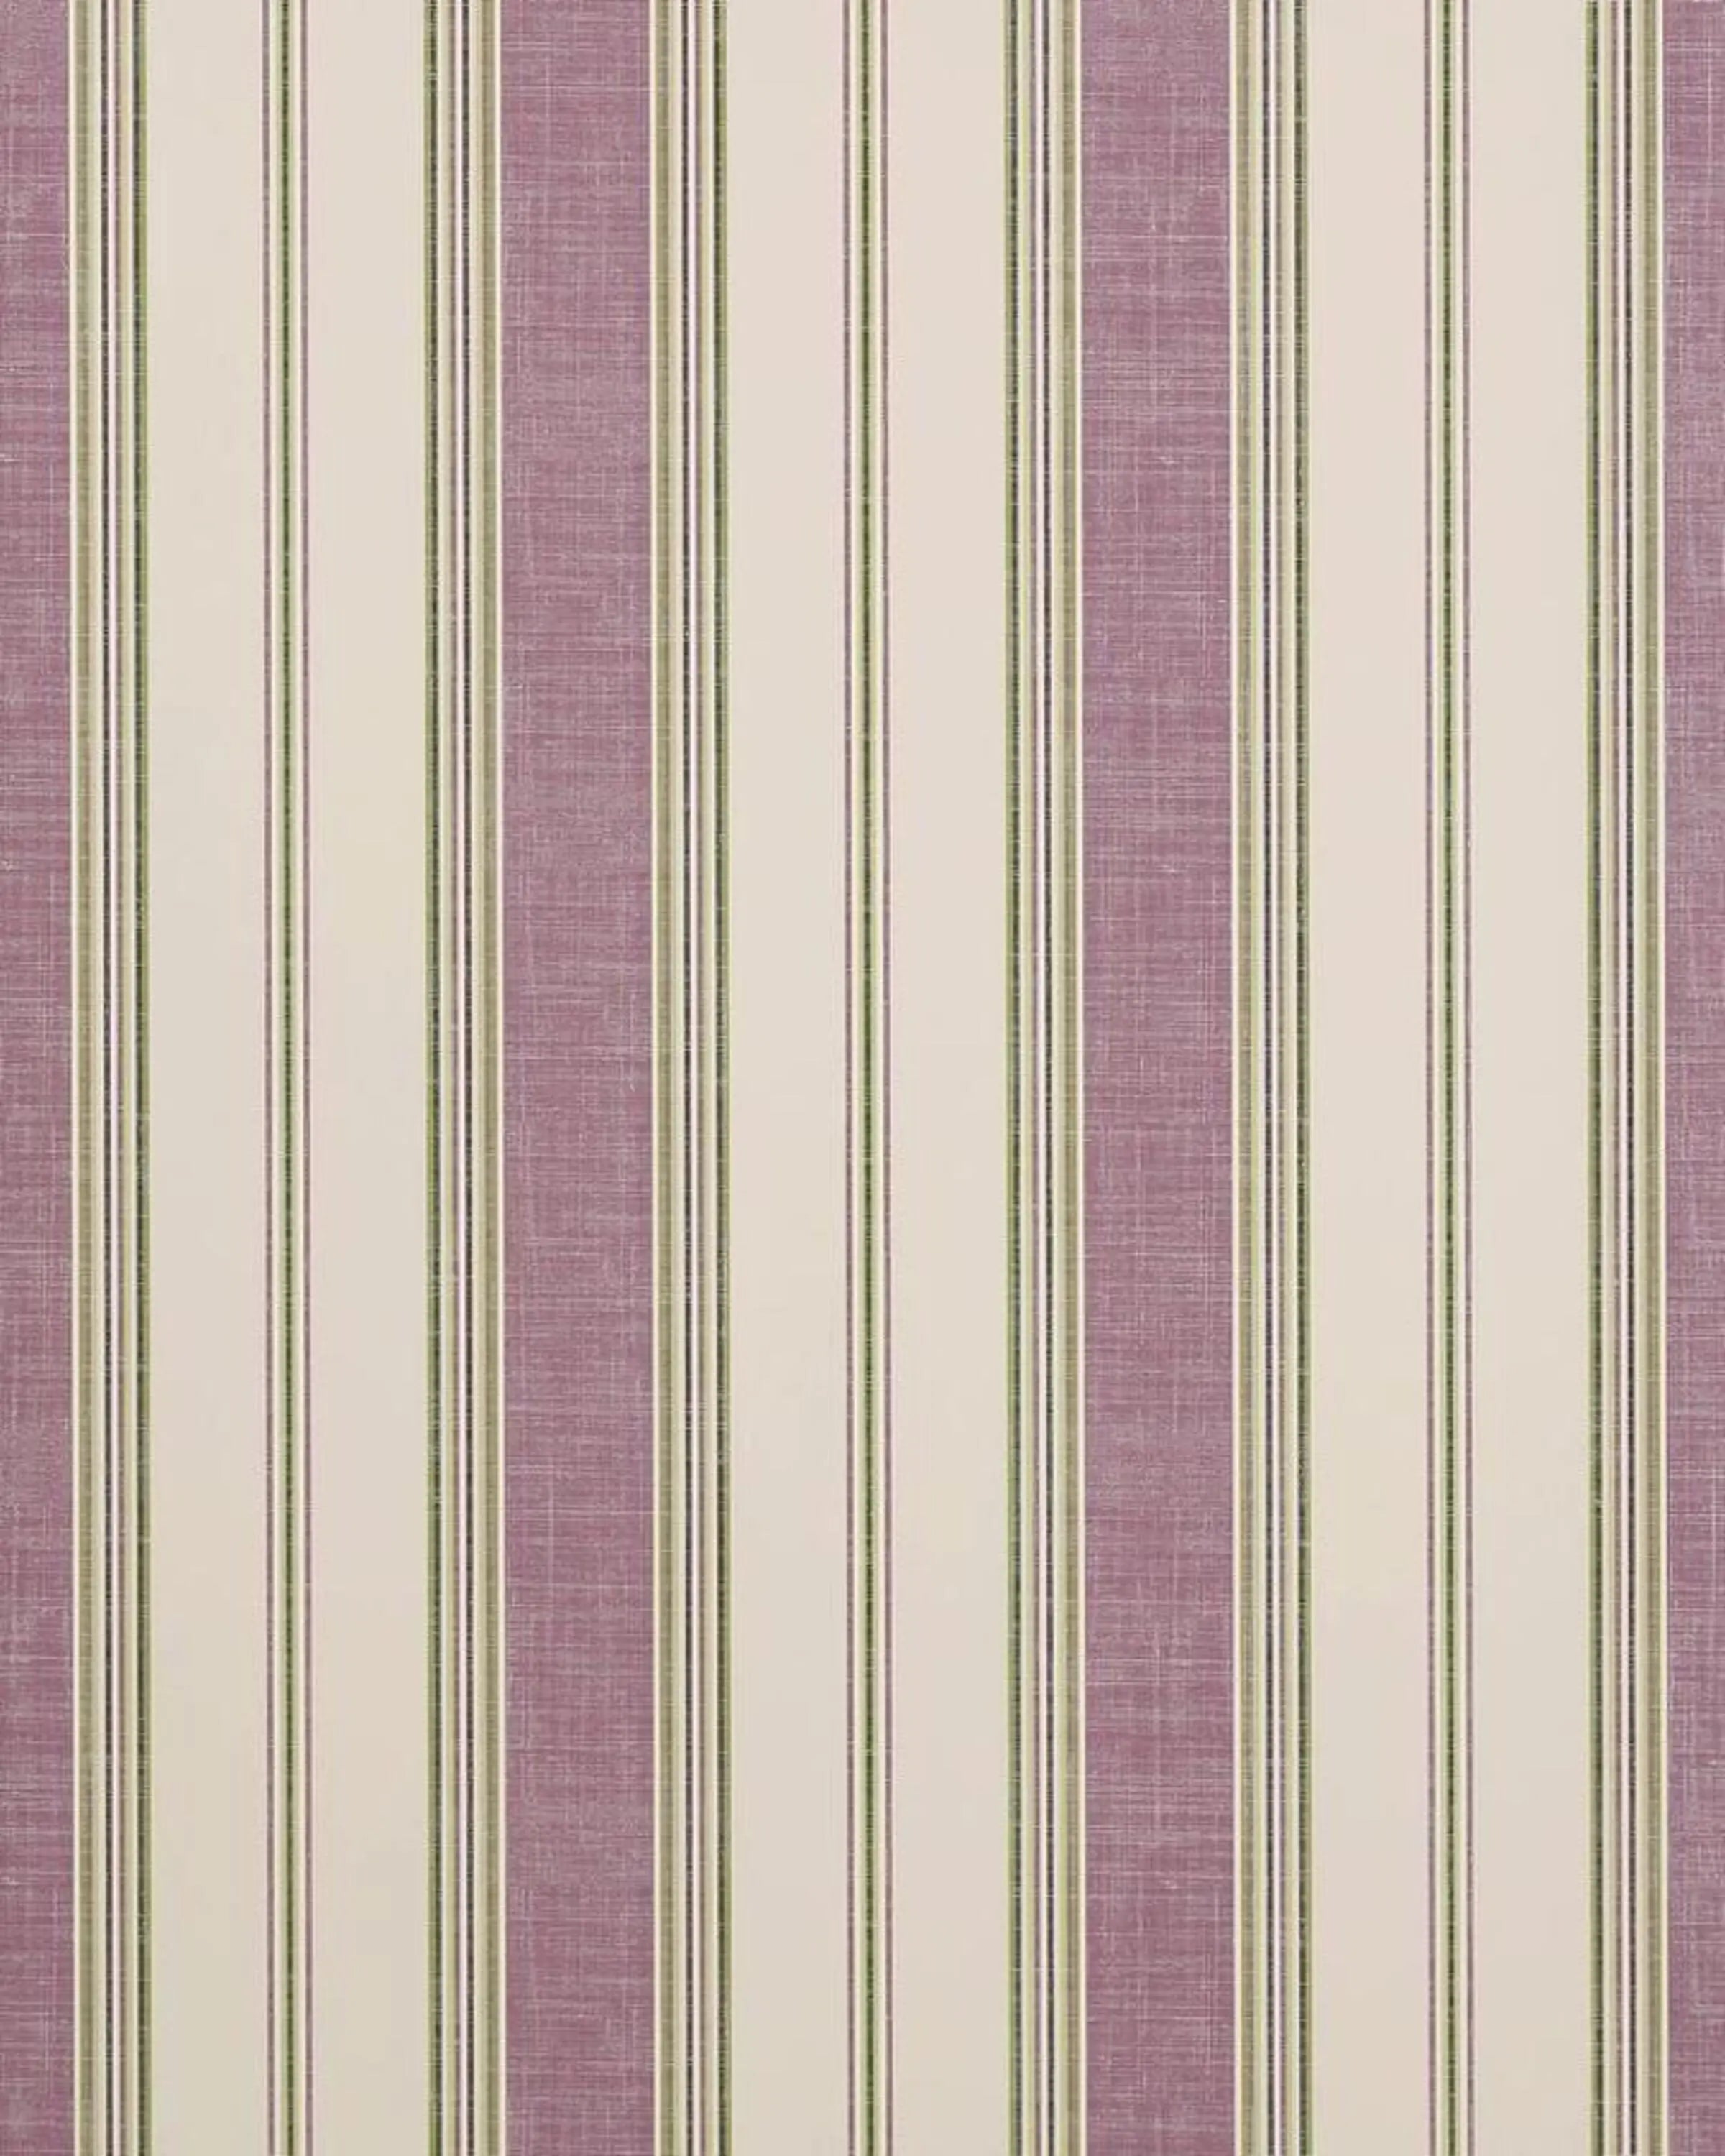 Mista Purple & White Striped Fabrics 